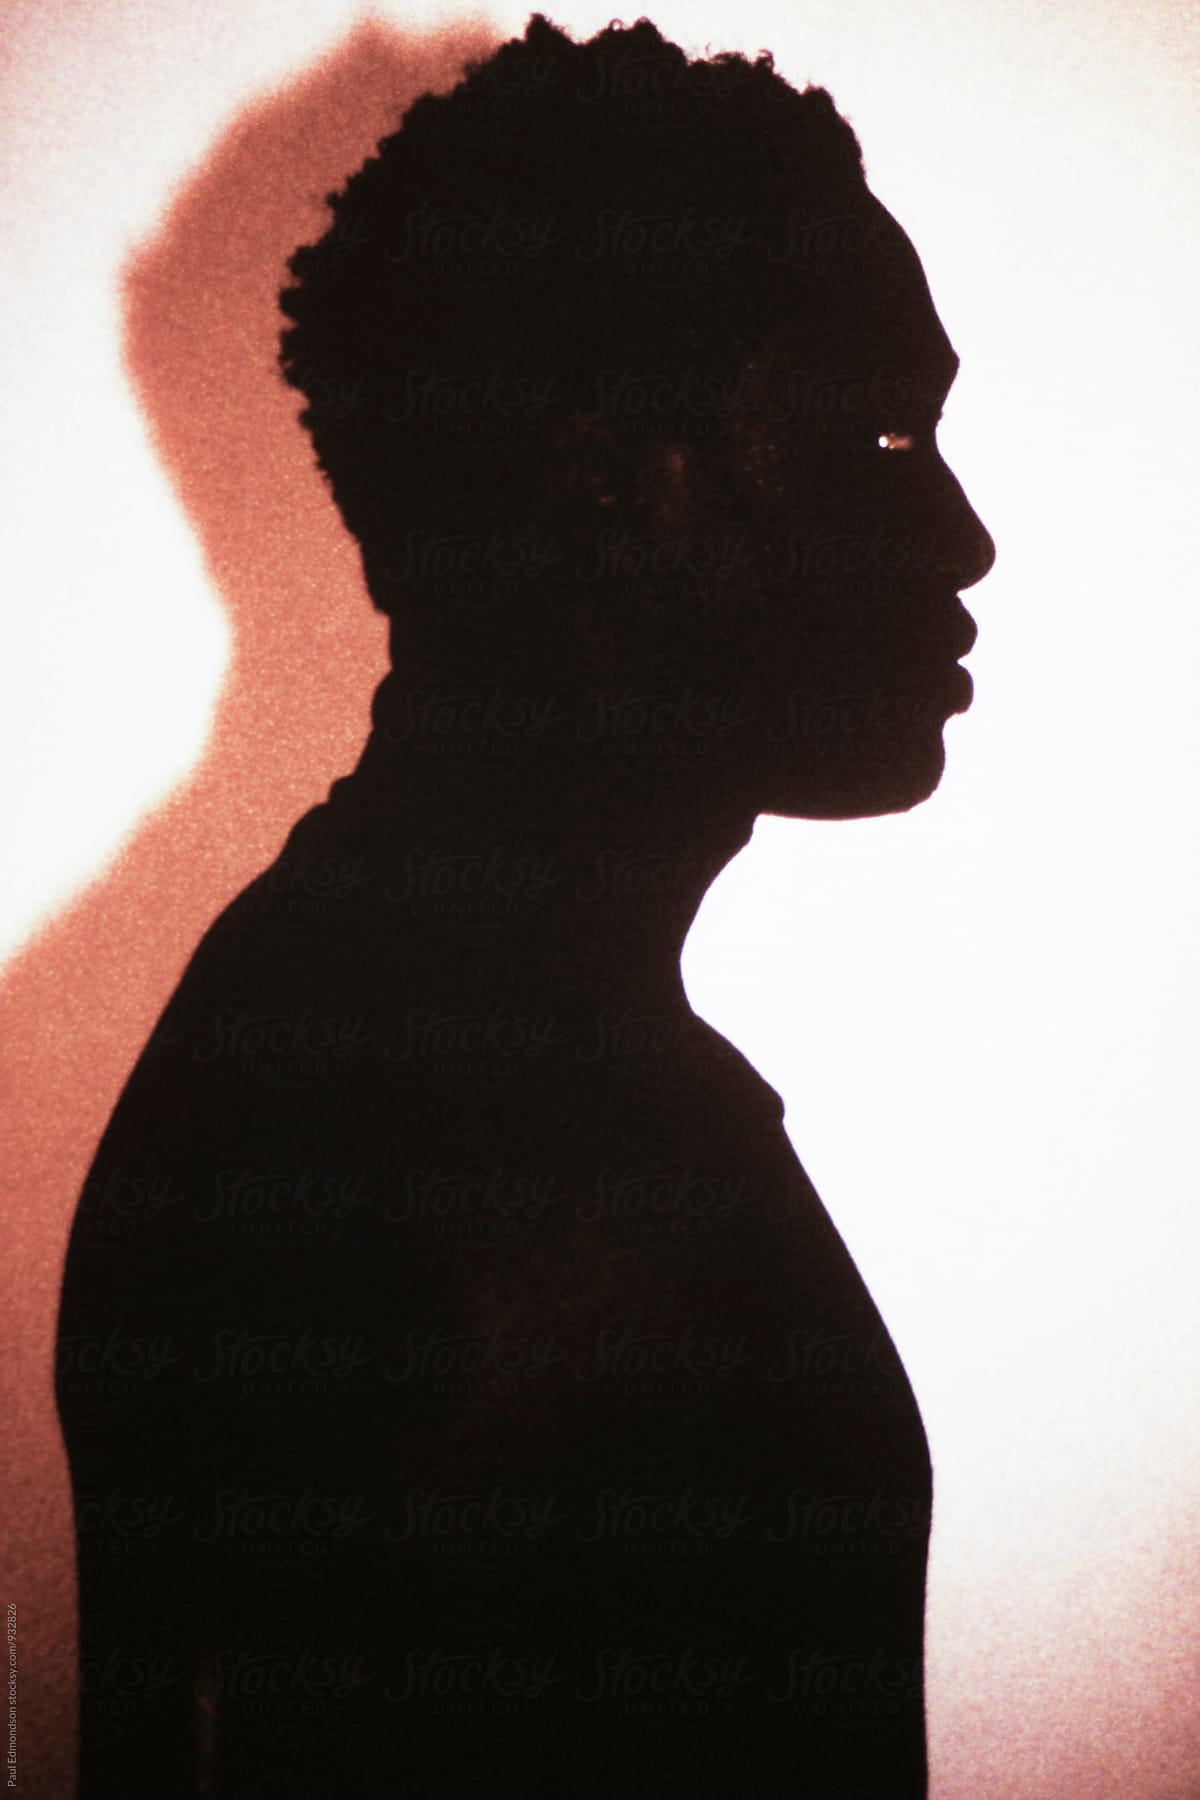 Profile of African American man